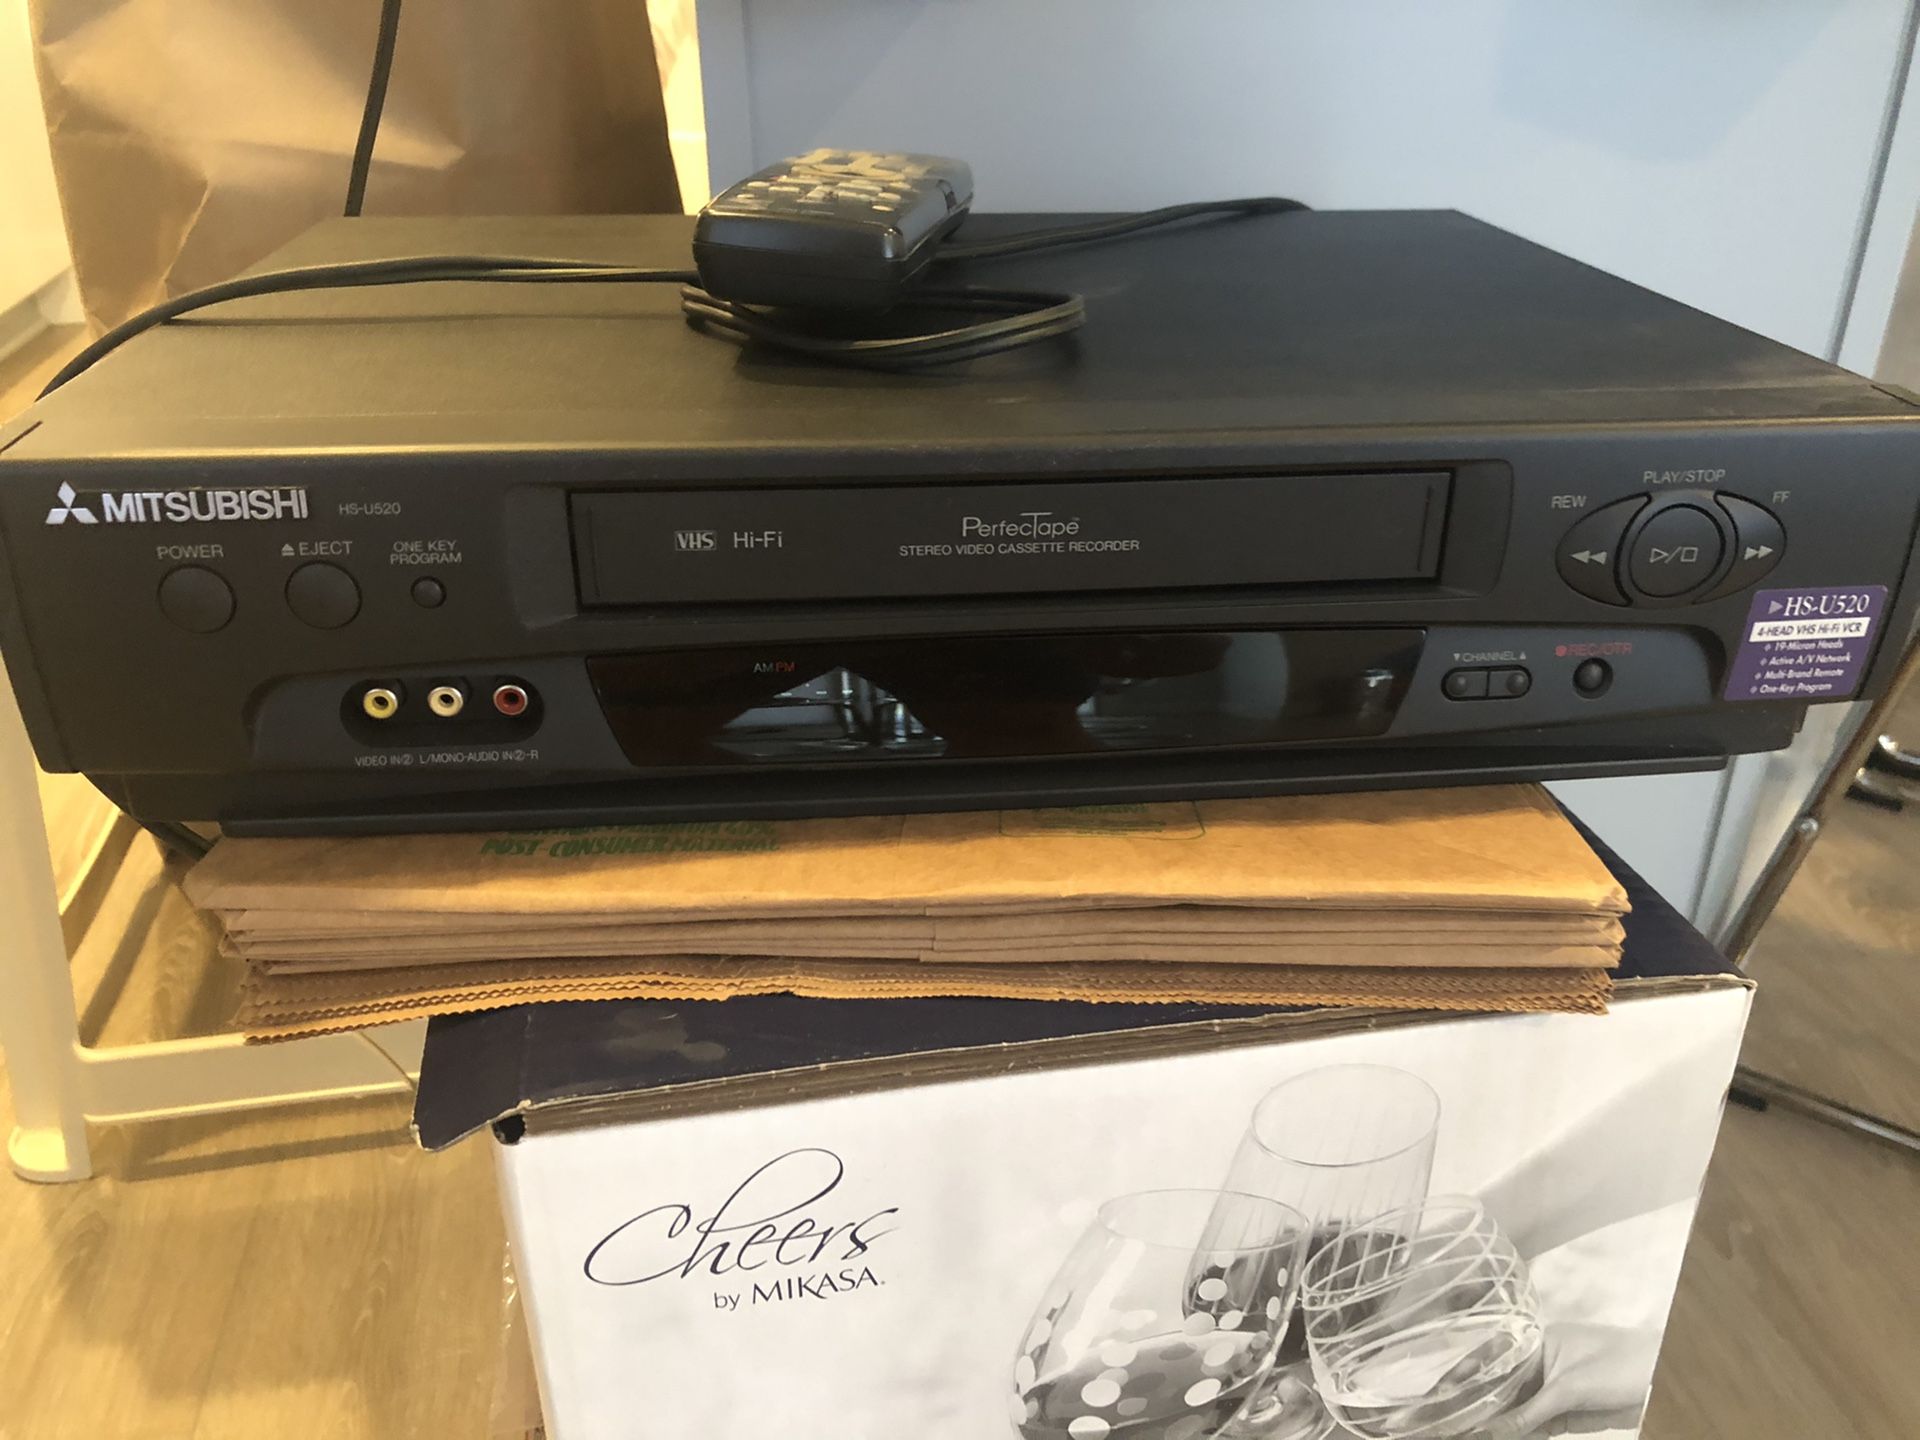 Mitsubishi HS-U520 VCR